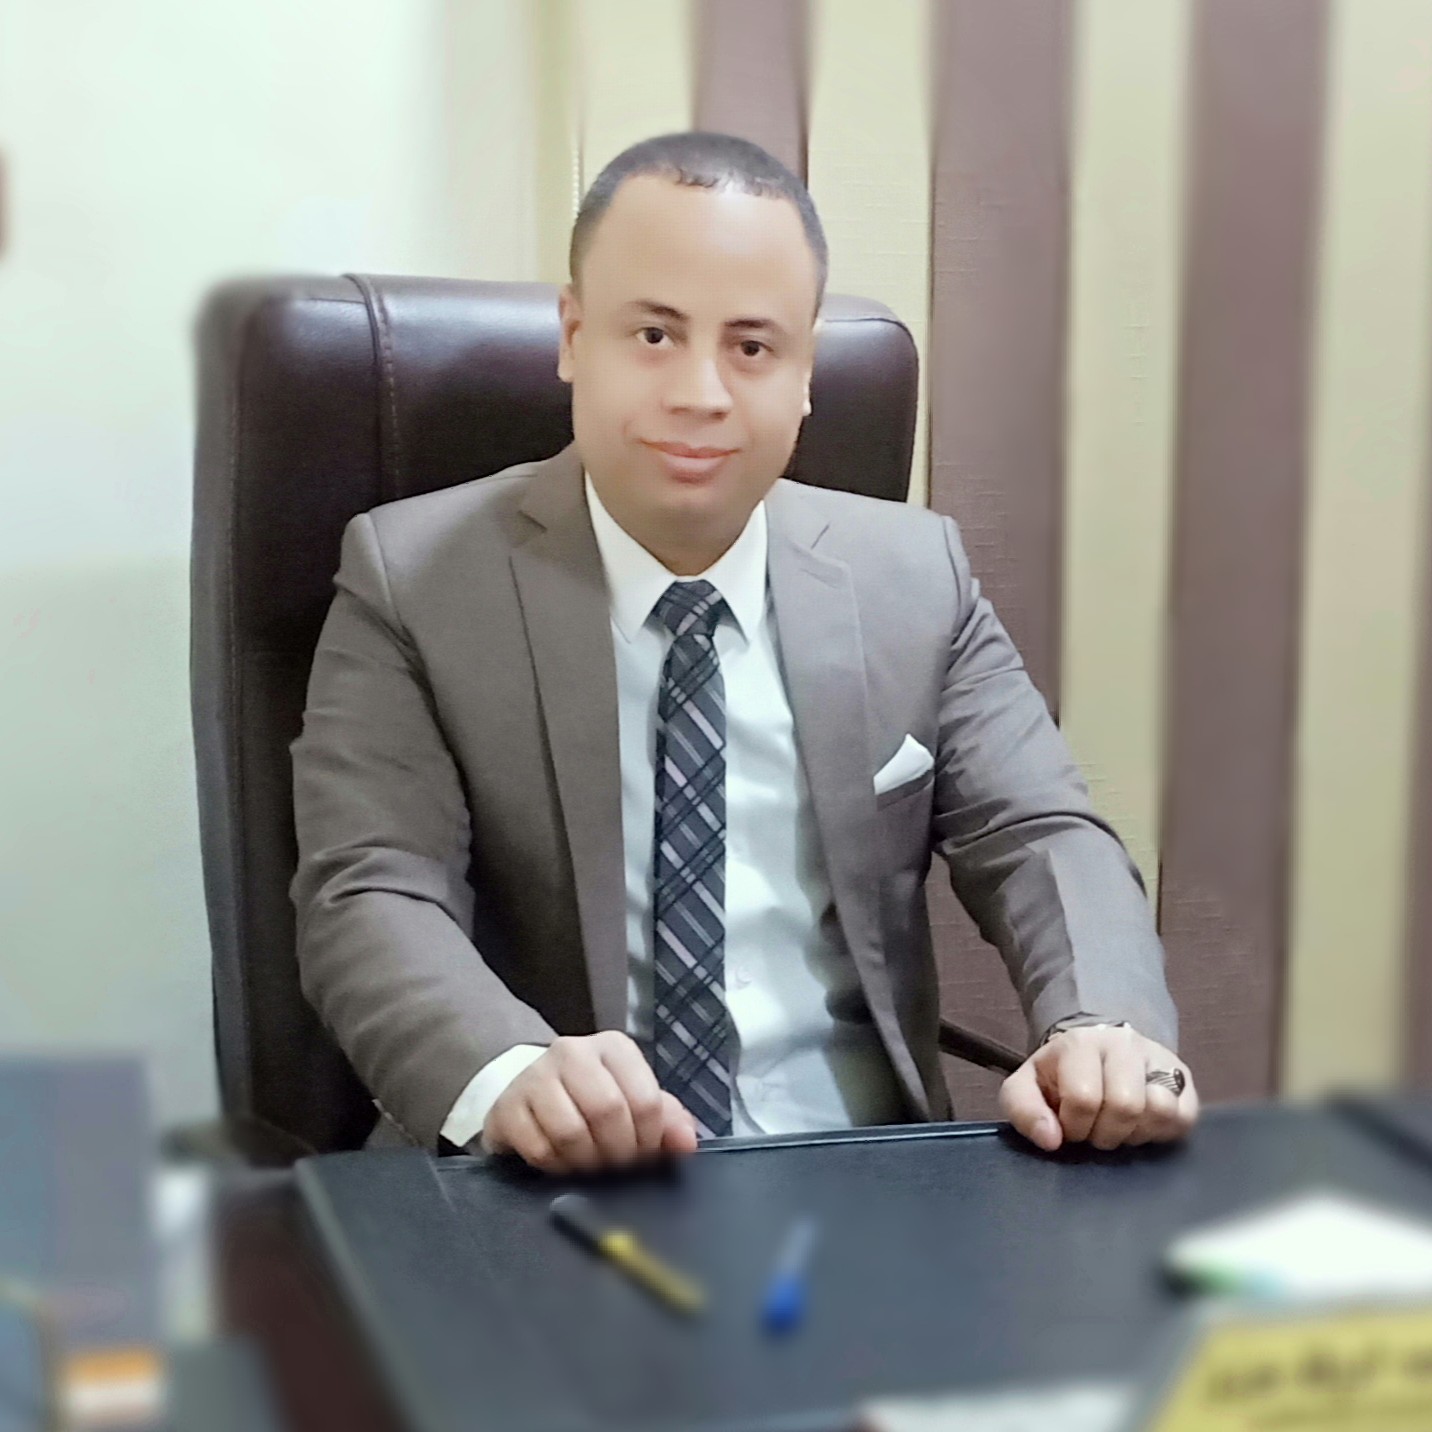 دكتور مصطفي عبدالرؤف عزوز